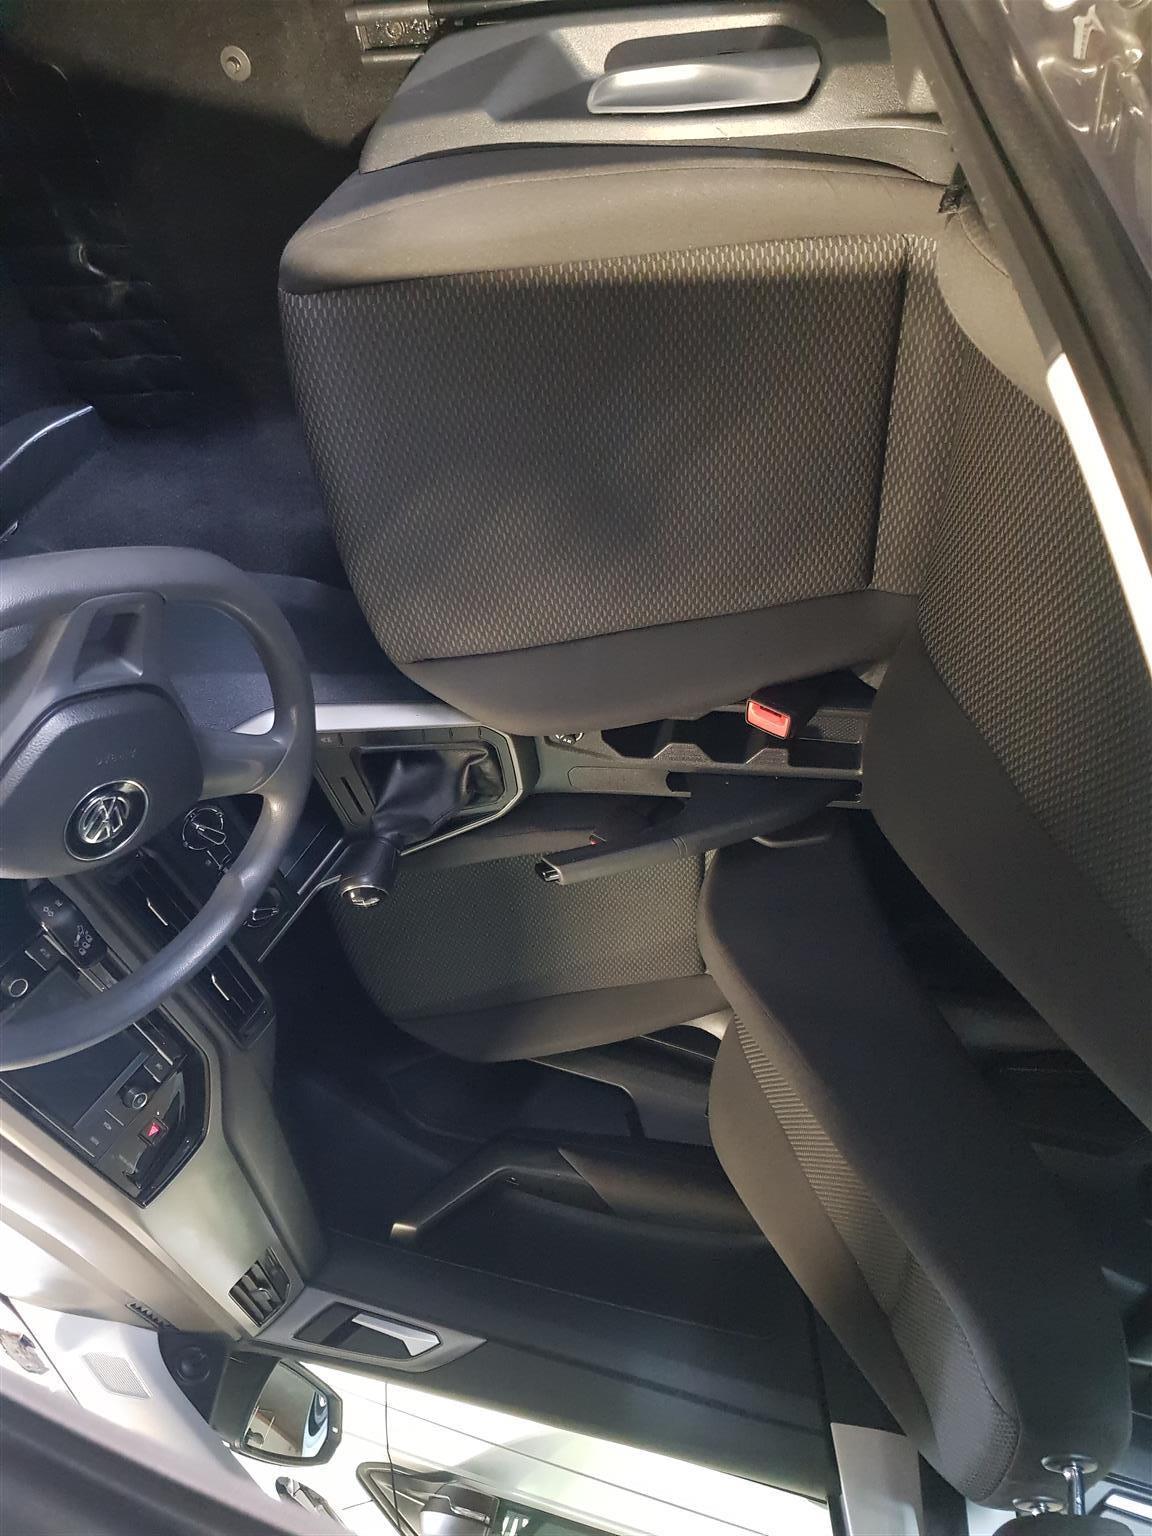 2018 VW Polo hatch POLO 1.0 TSI TRENDLINE